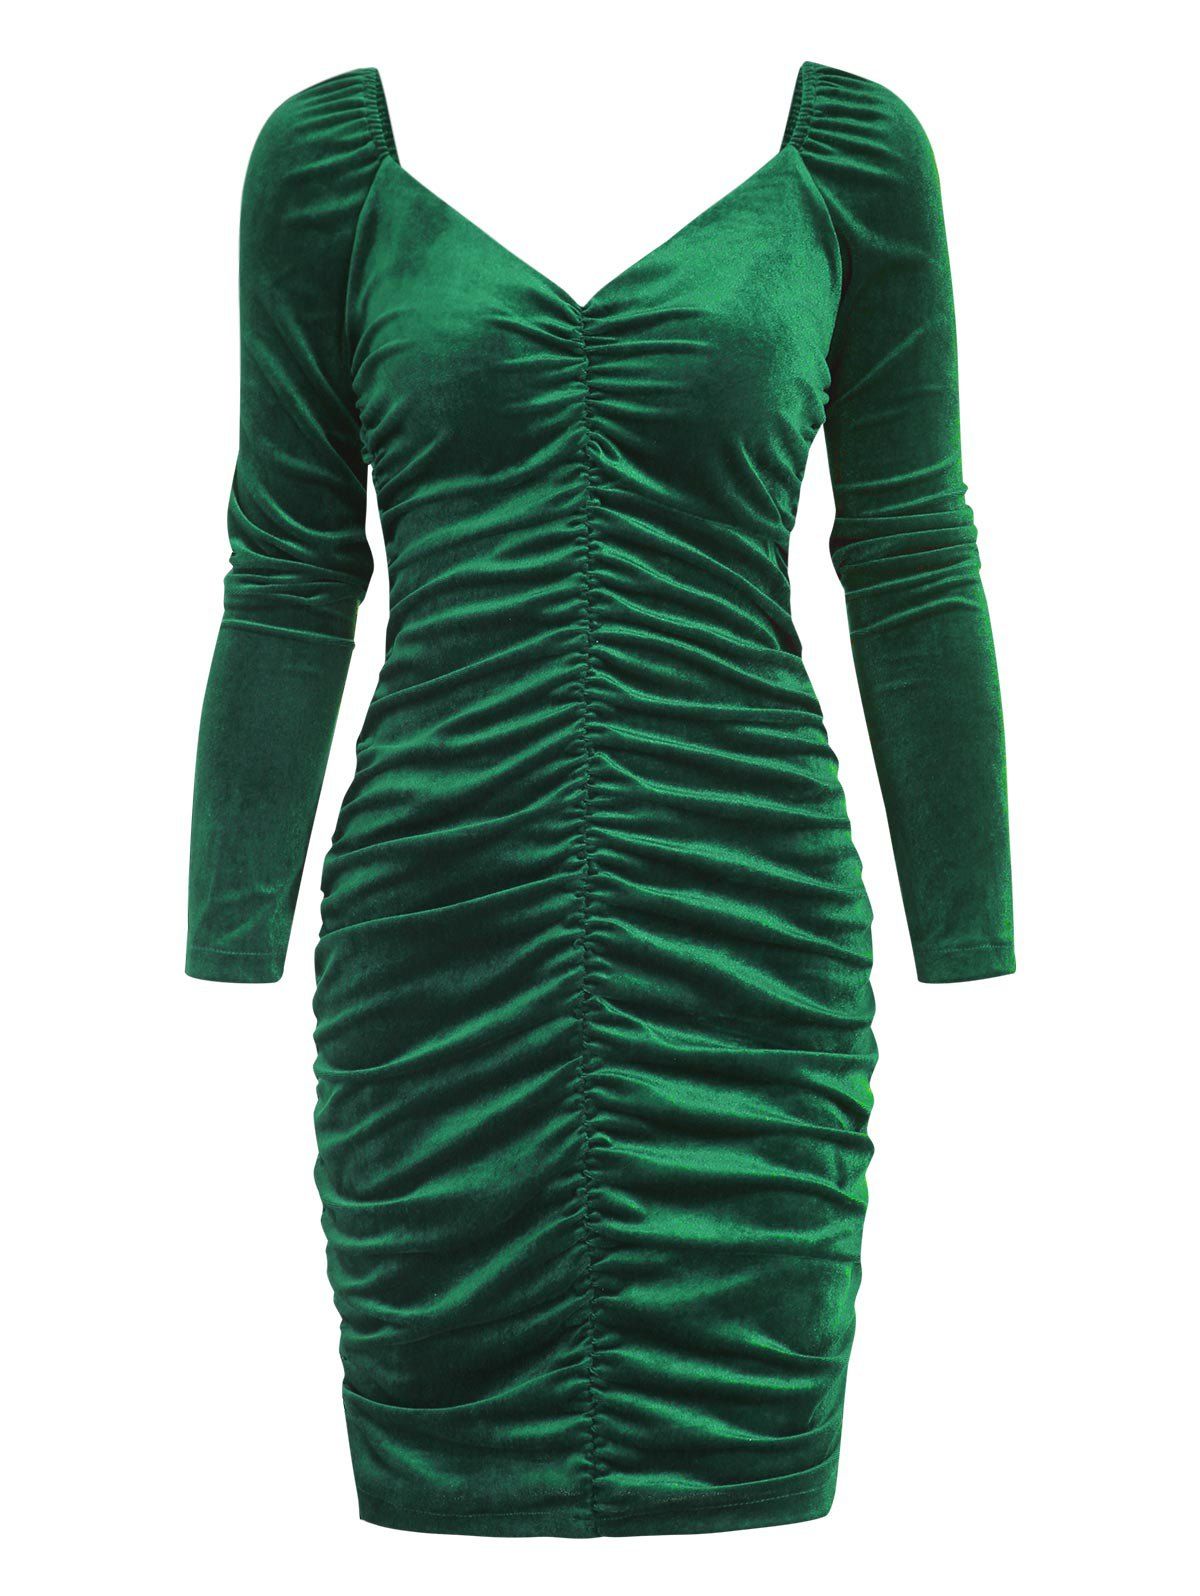 Velour Ruched Mini Slinky Dress - DEEP GREEN L